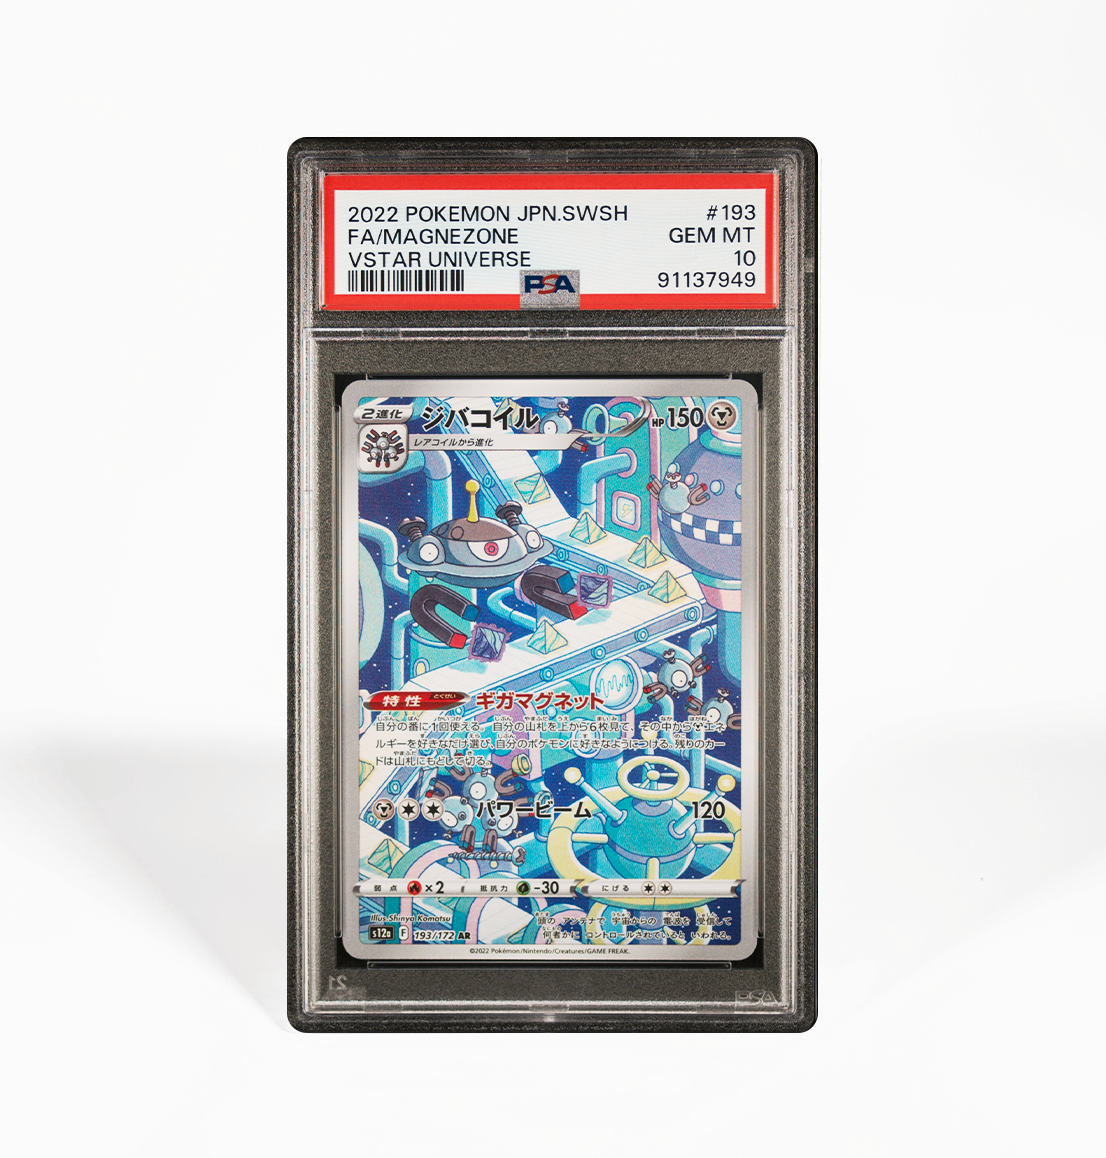 PSA 10 Magnezone #193 VStar Universe s12a Japanese Pokemon card